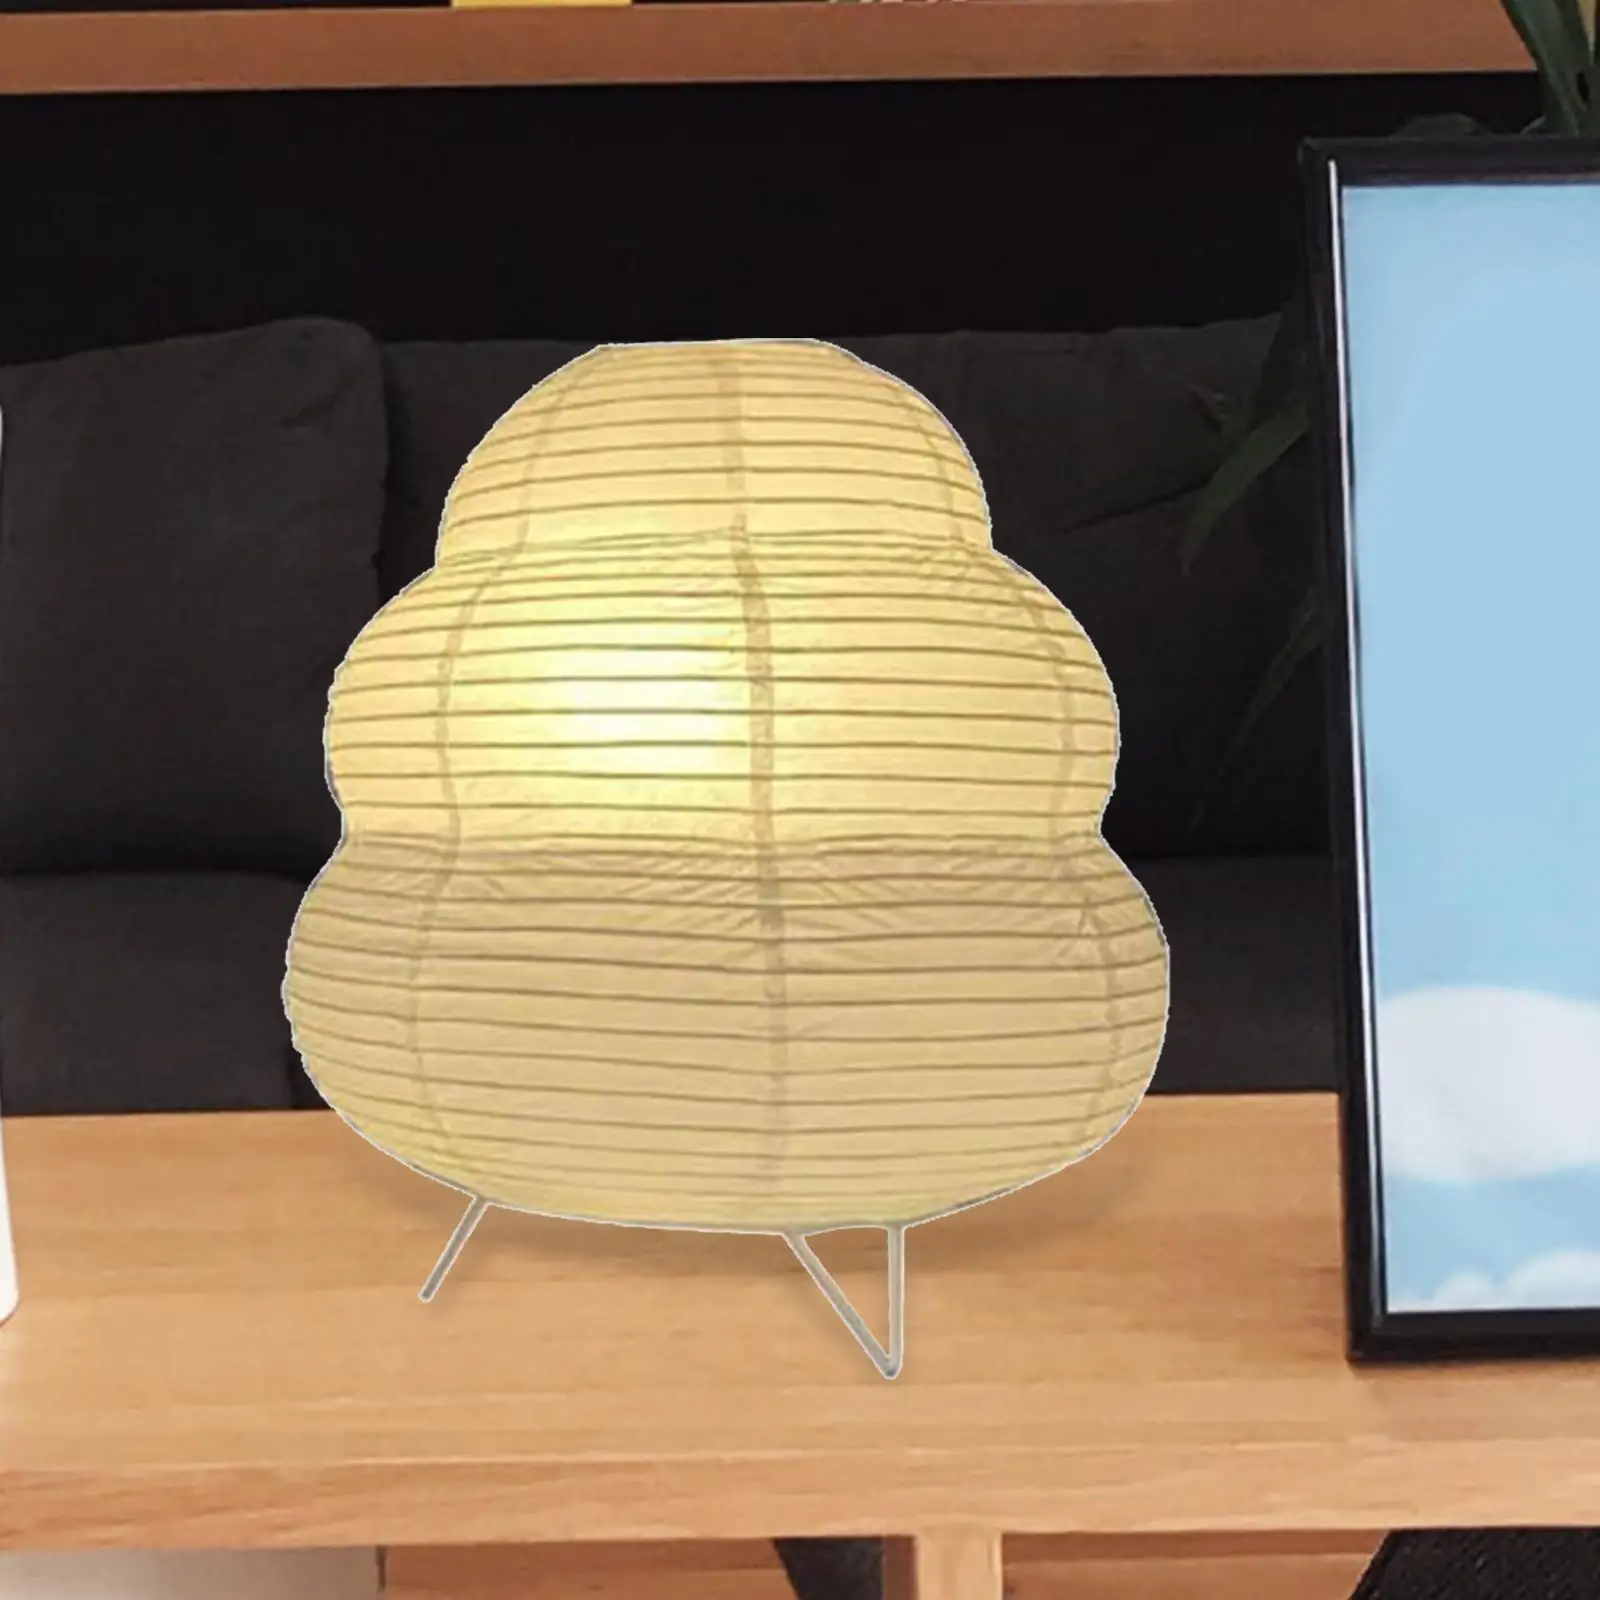 Bedside Paper Table Lamp Desk Lamp Creative Simple Lamp for Bedroom Dorm